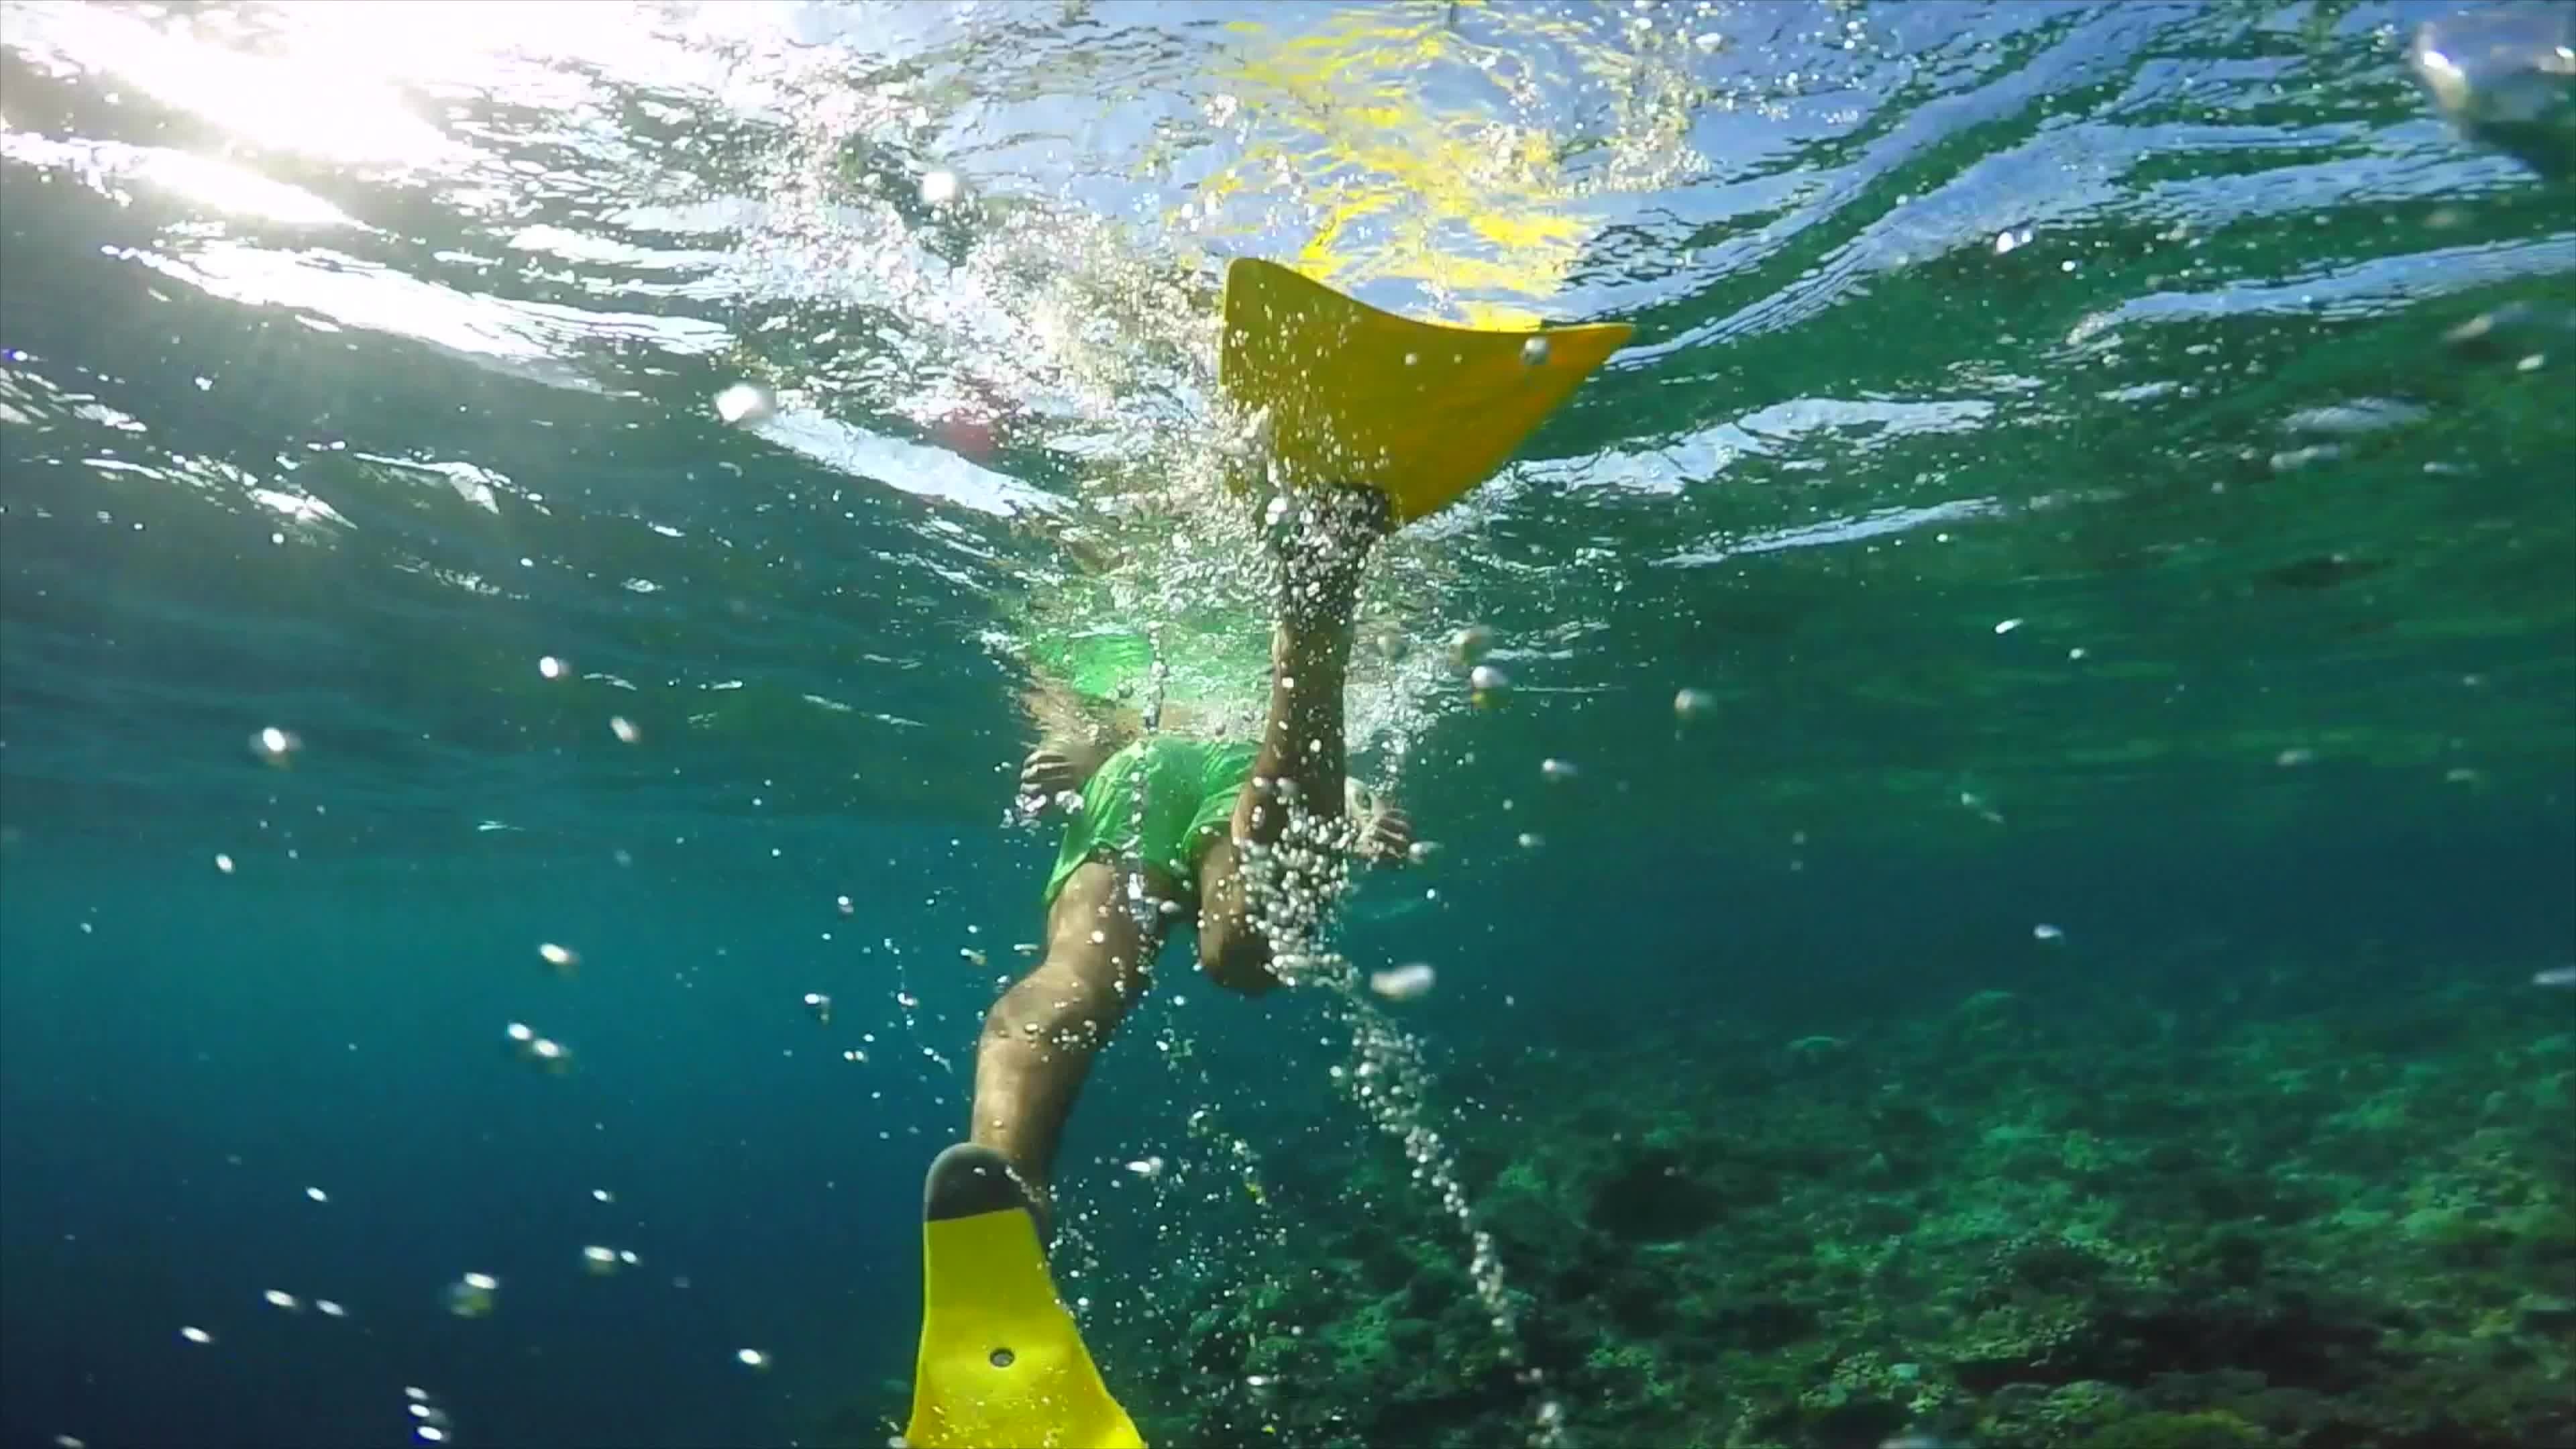 Snorkeling: A popular recreational activity, Tropical resort locations, Diving equipment, Ocean reef. 3840x2160 4K Wallpaper.